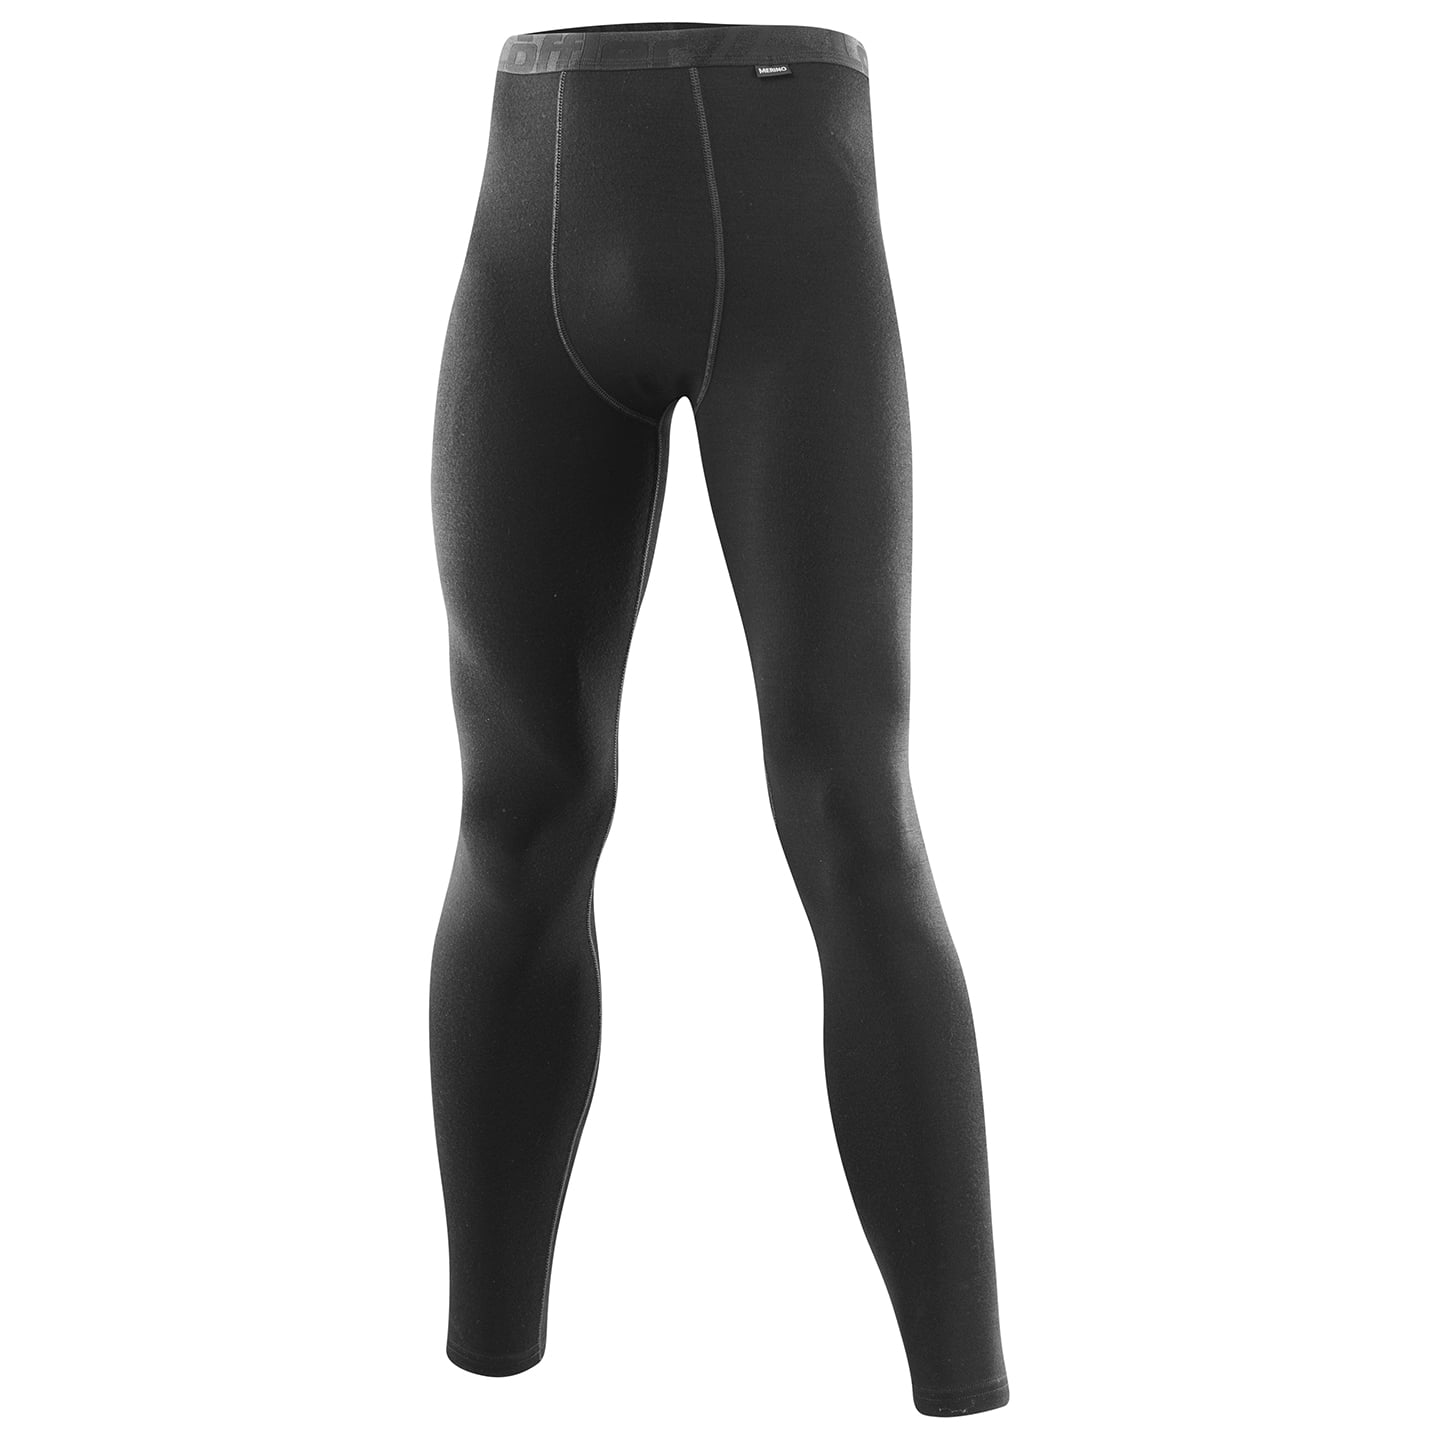 LOFFLER long cycling pants without pad Transtex Merino Cycling Briefs w/o Pad, for men, size XL, Briefs, Cycling clothing